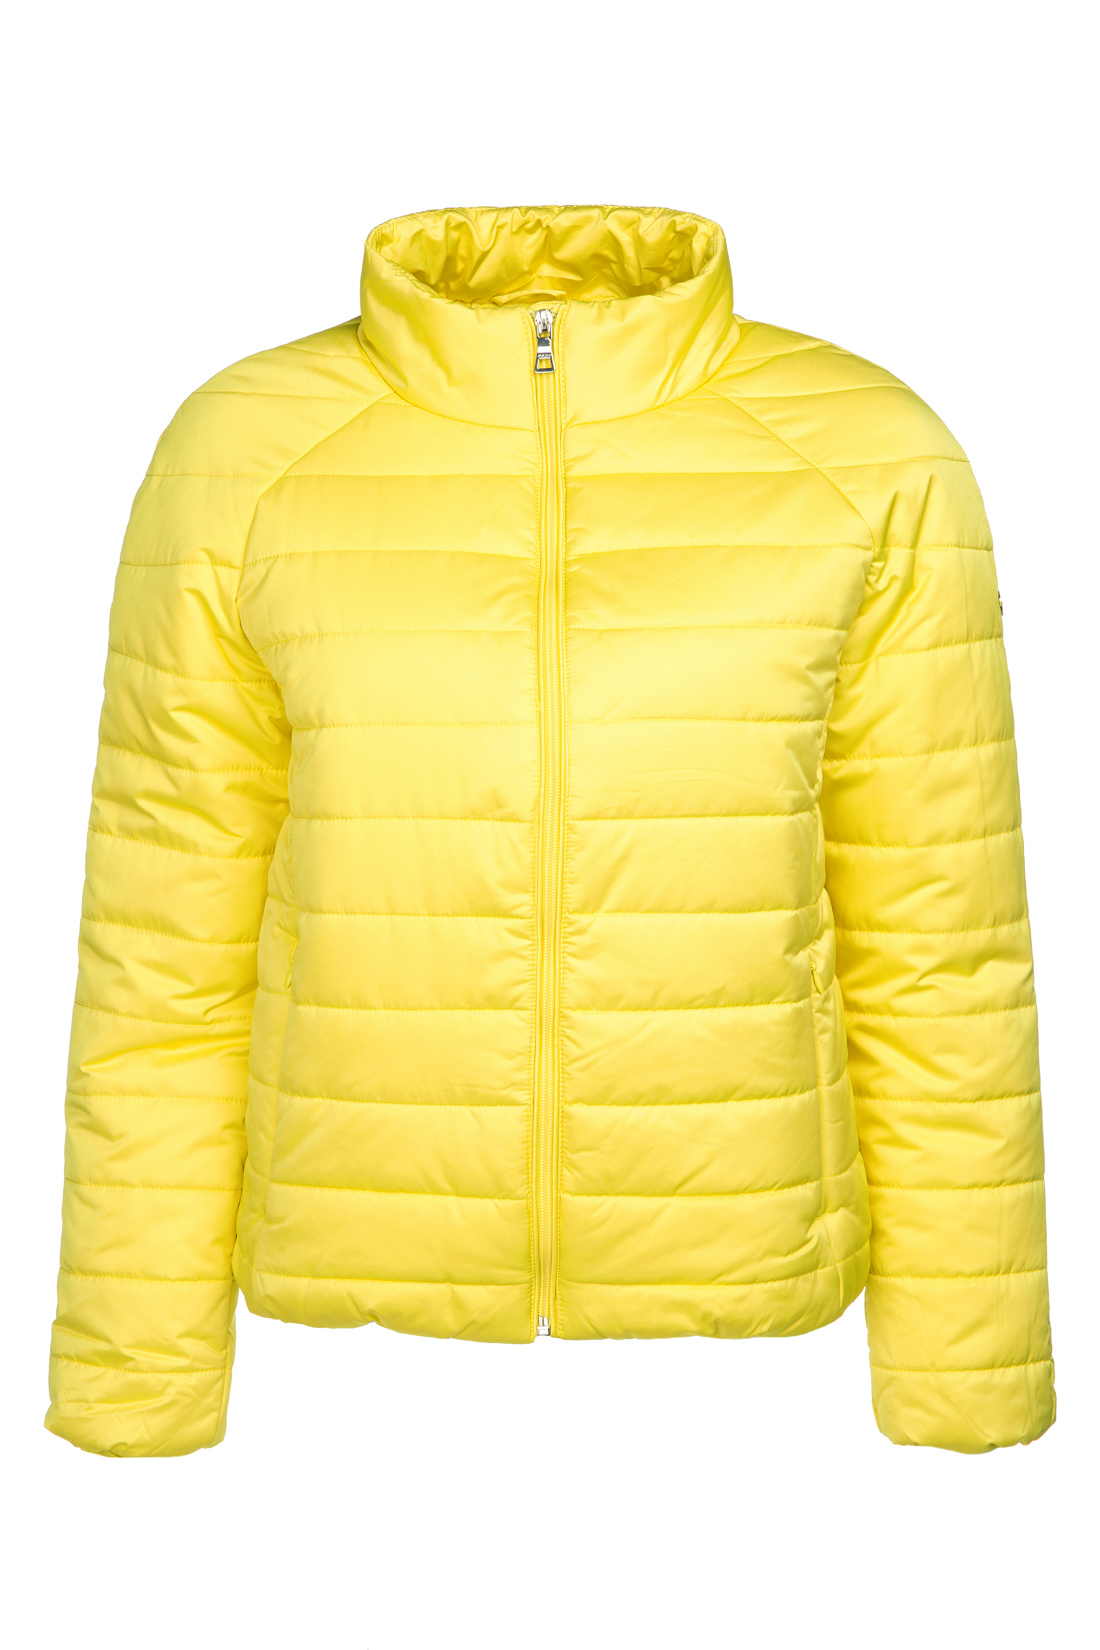 Куртка в спортивном стиле (арт. baon B037007), размер S, цвет желтый Куртка в спортивном стиле (арт. baon B037007) - фото 4